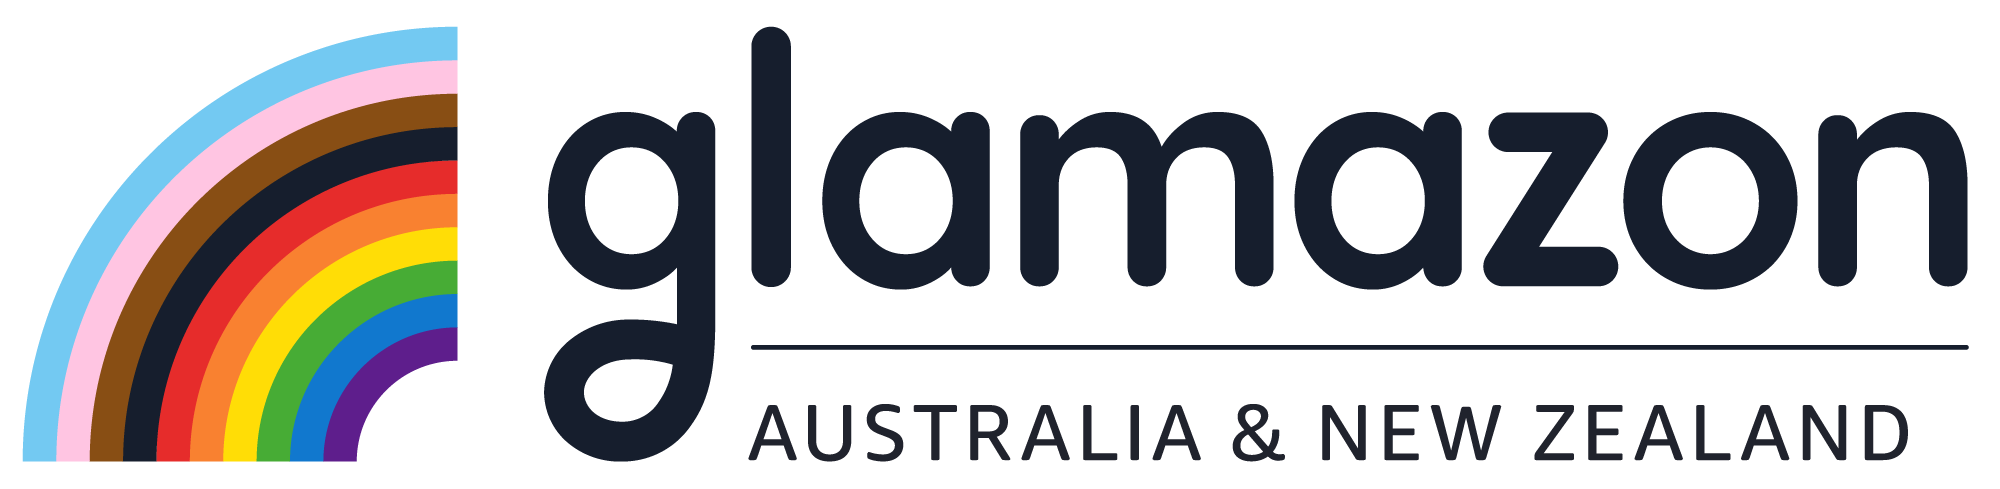 glamazon logo